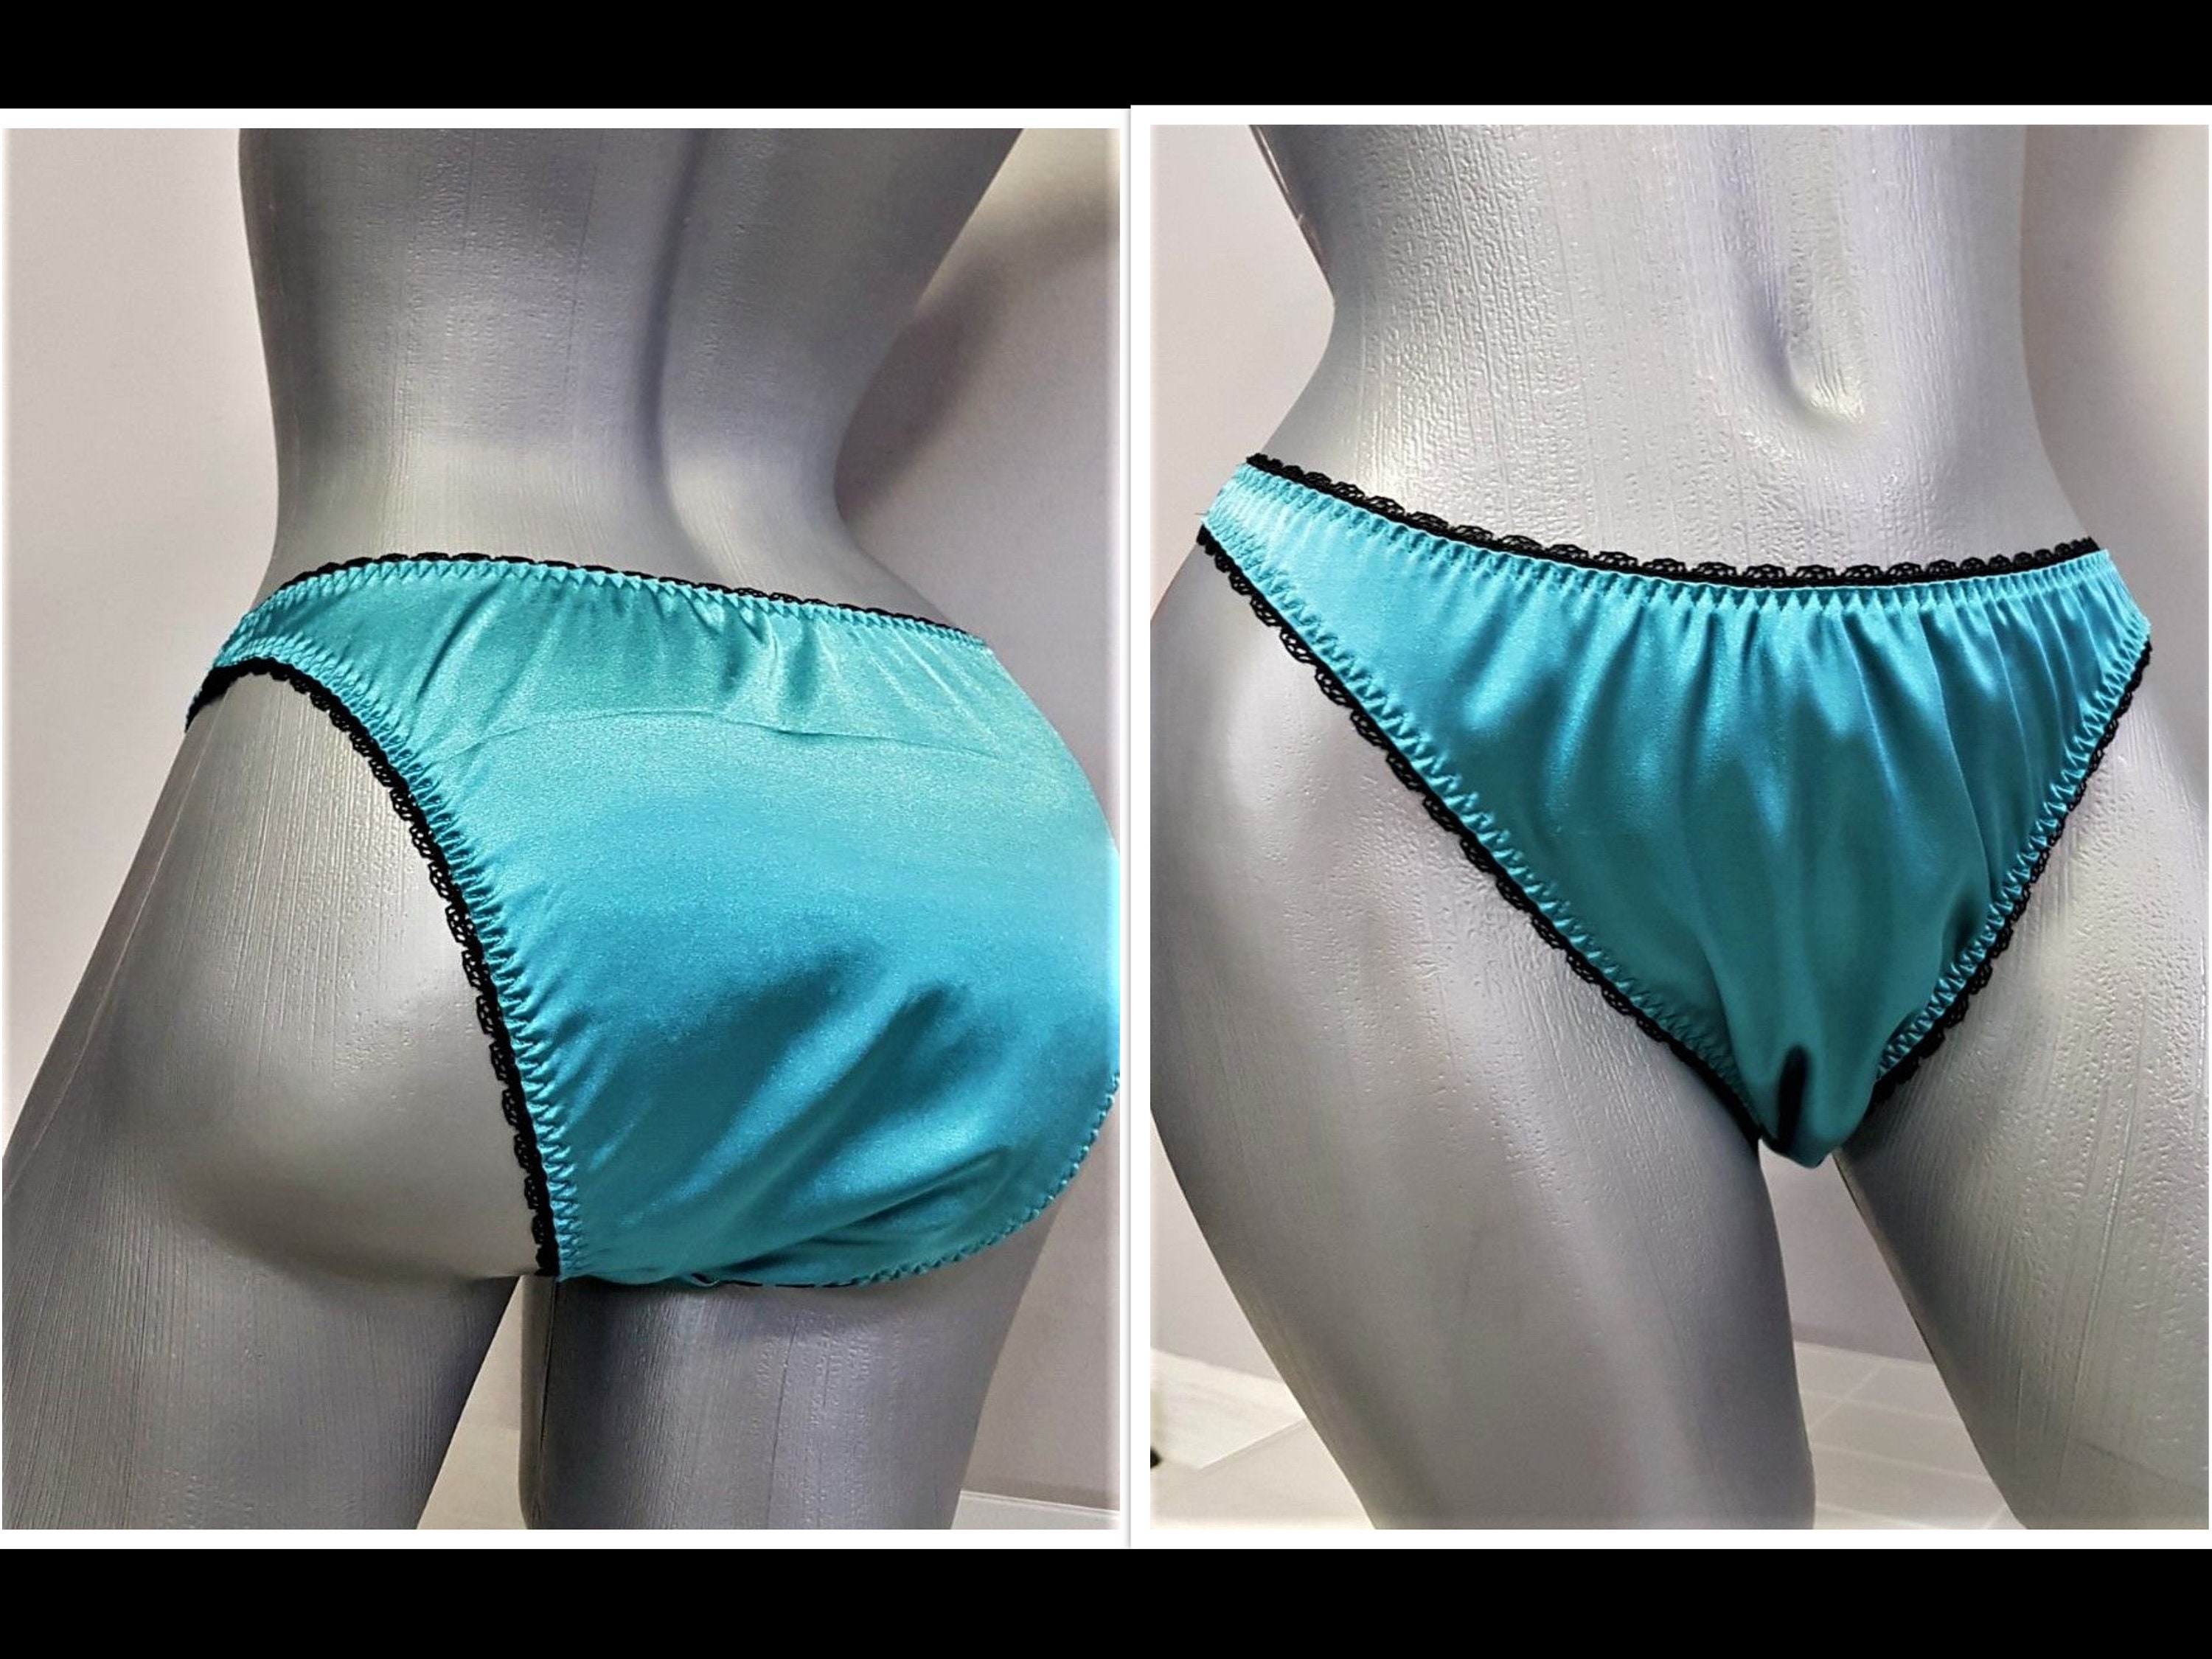 Balance – Turquoise – Women's Incontinence Underwear – FANNYPANTS®